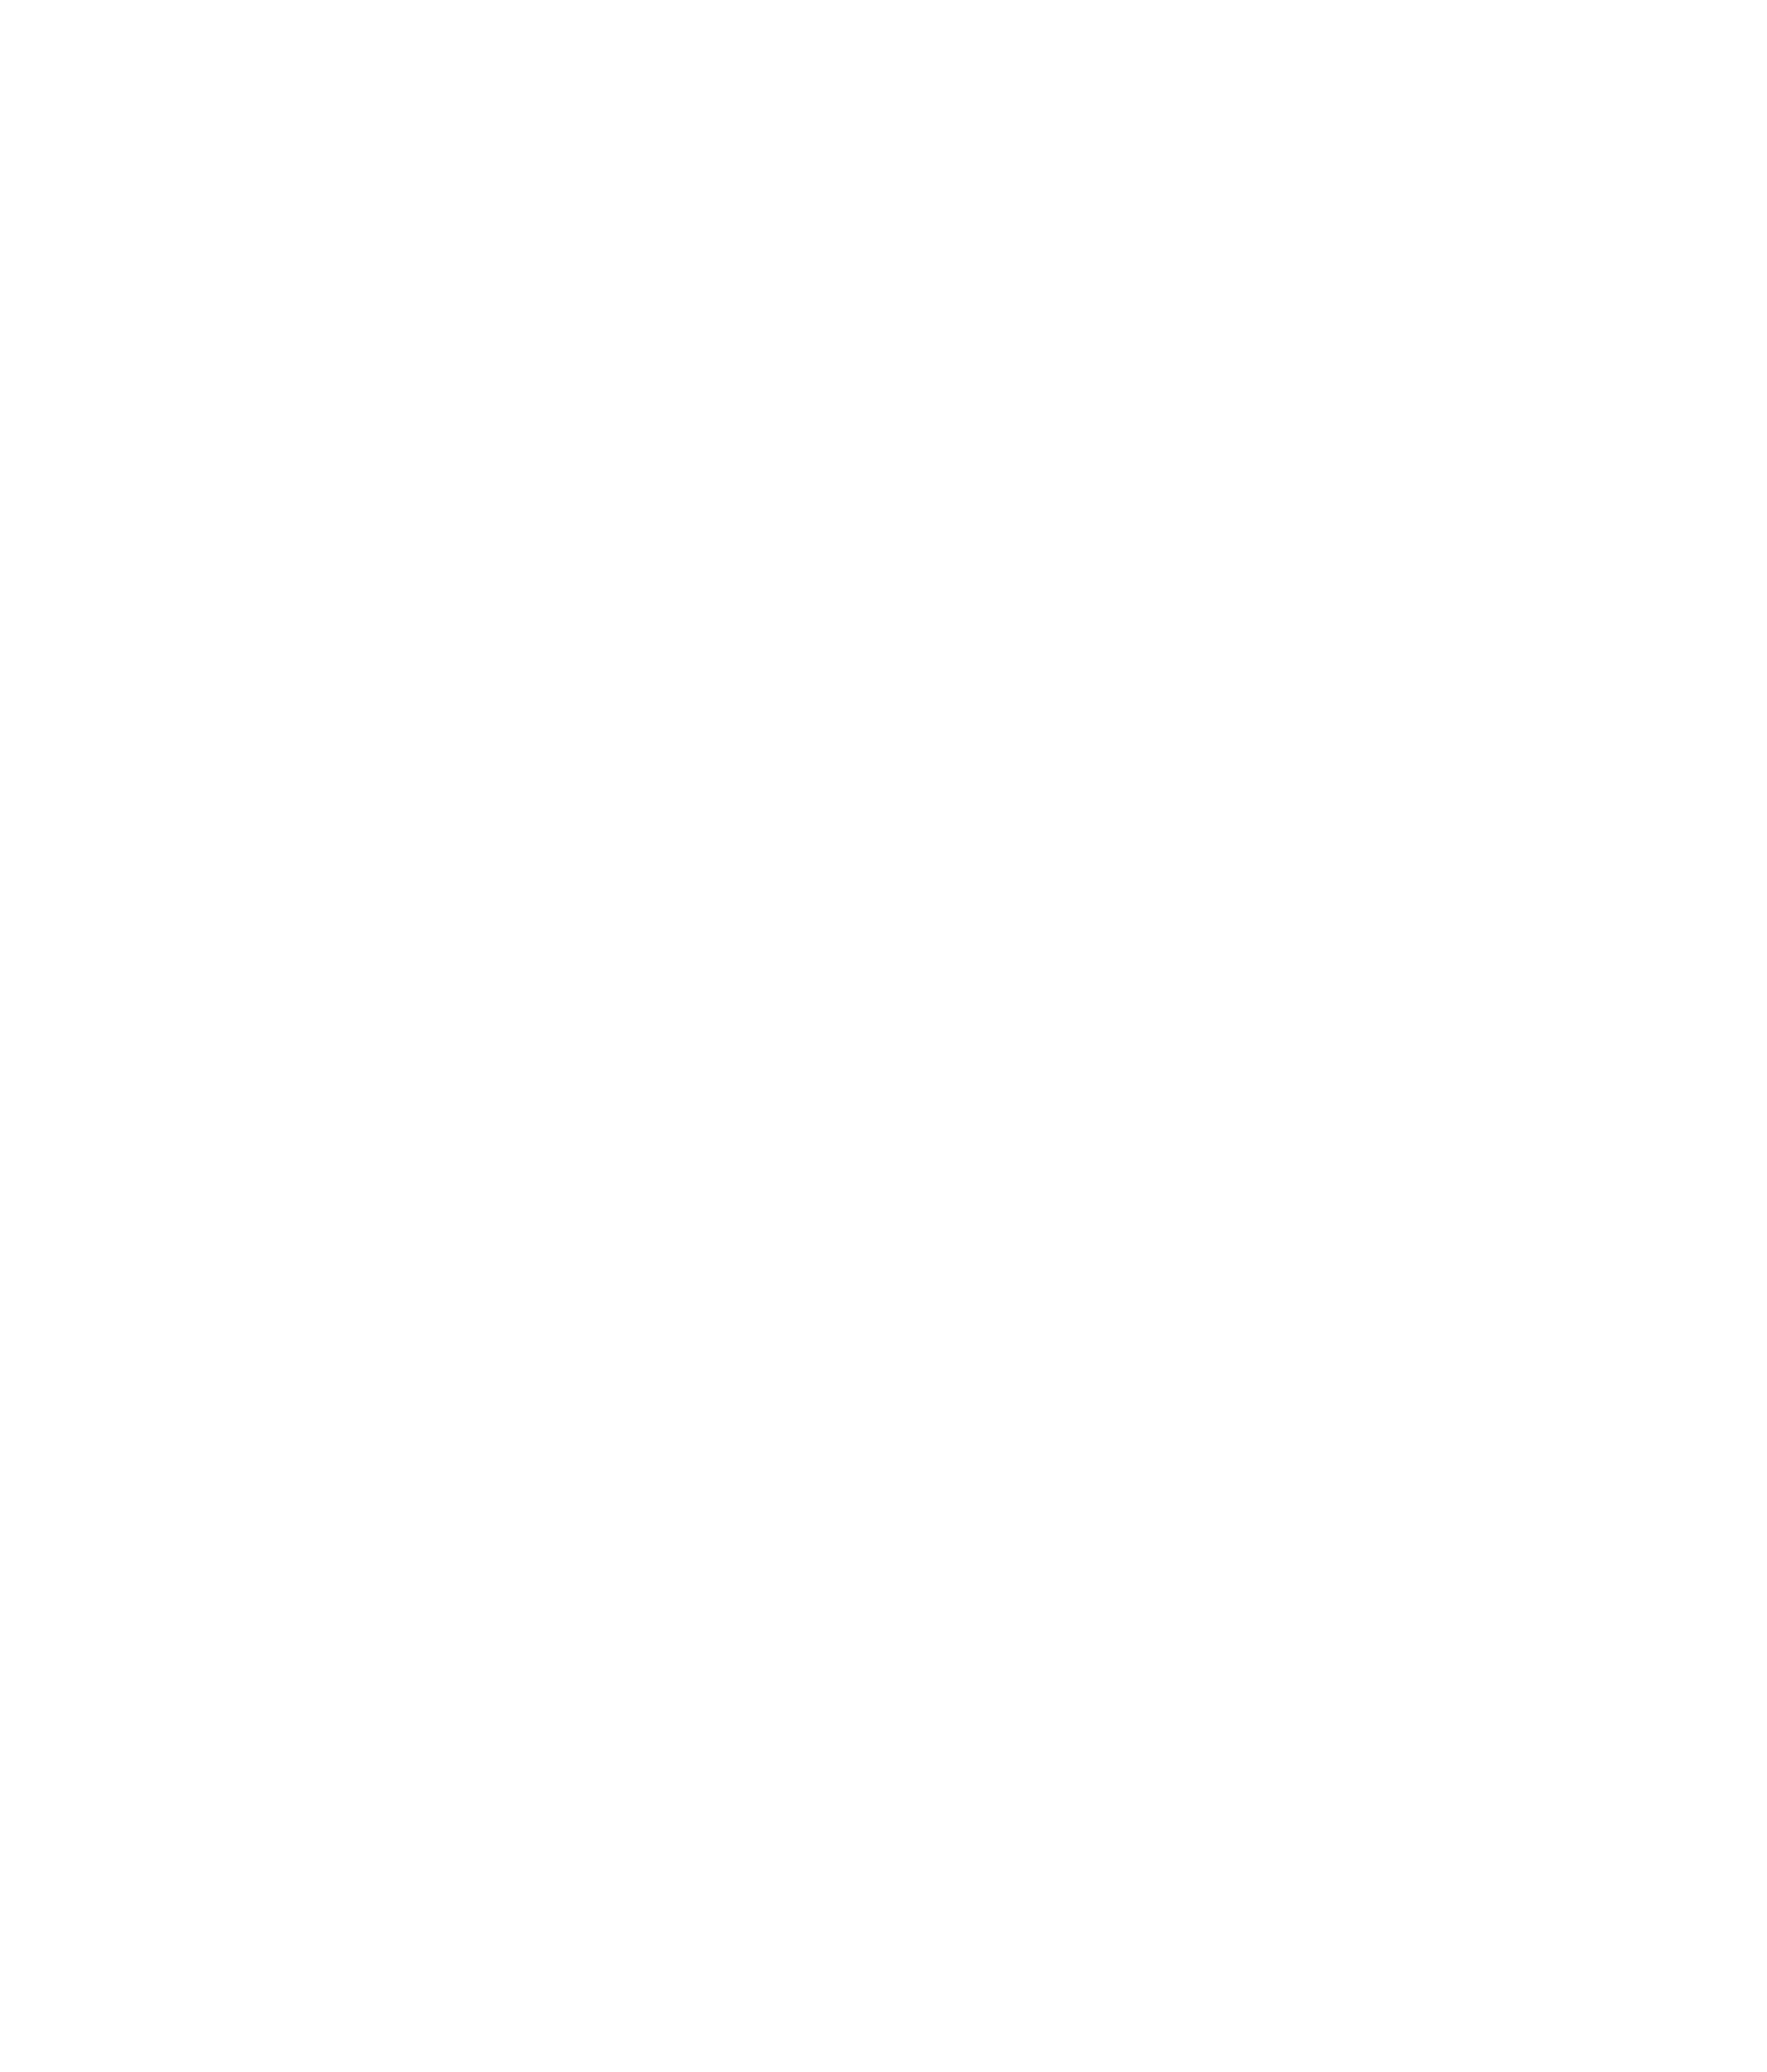 Christ Church Evangelical Covenant